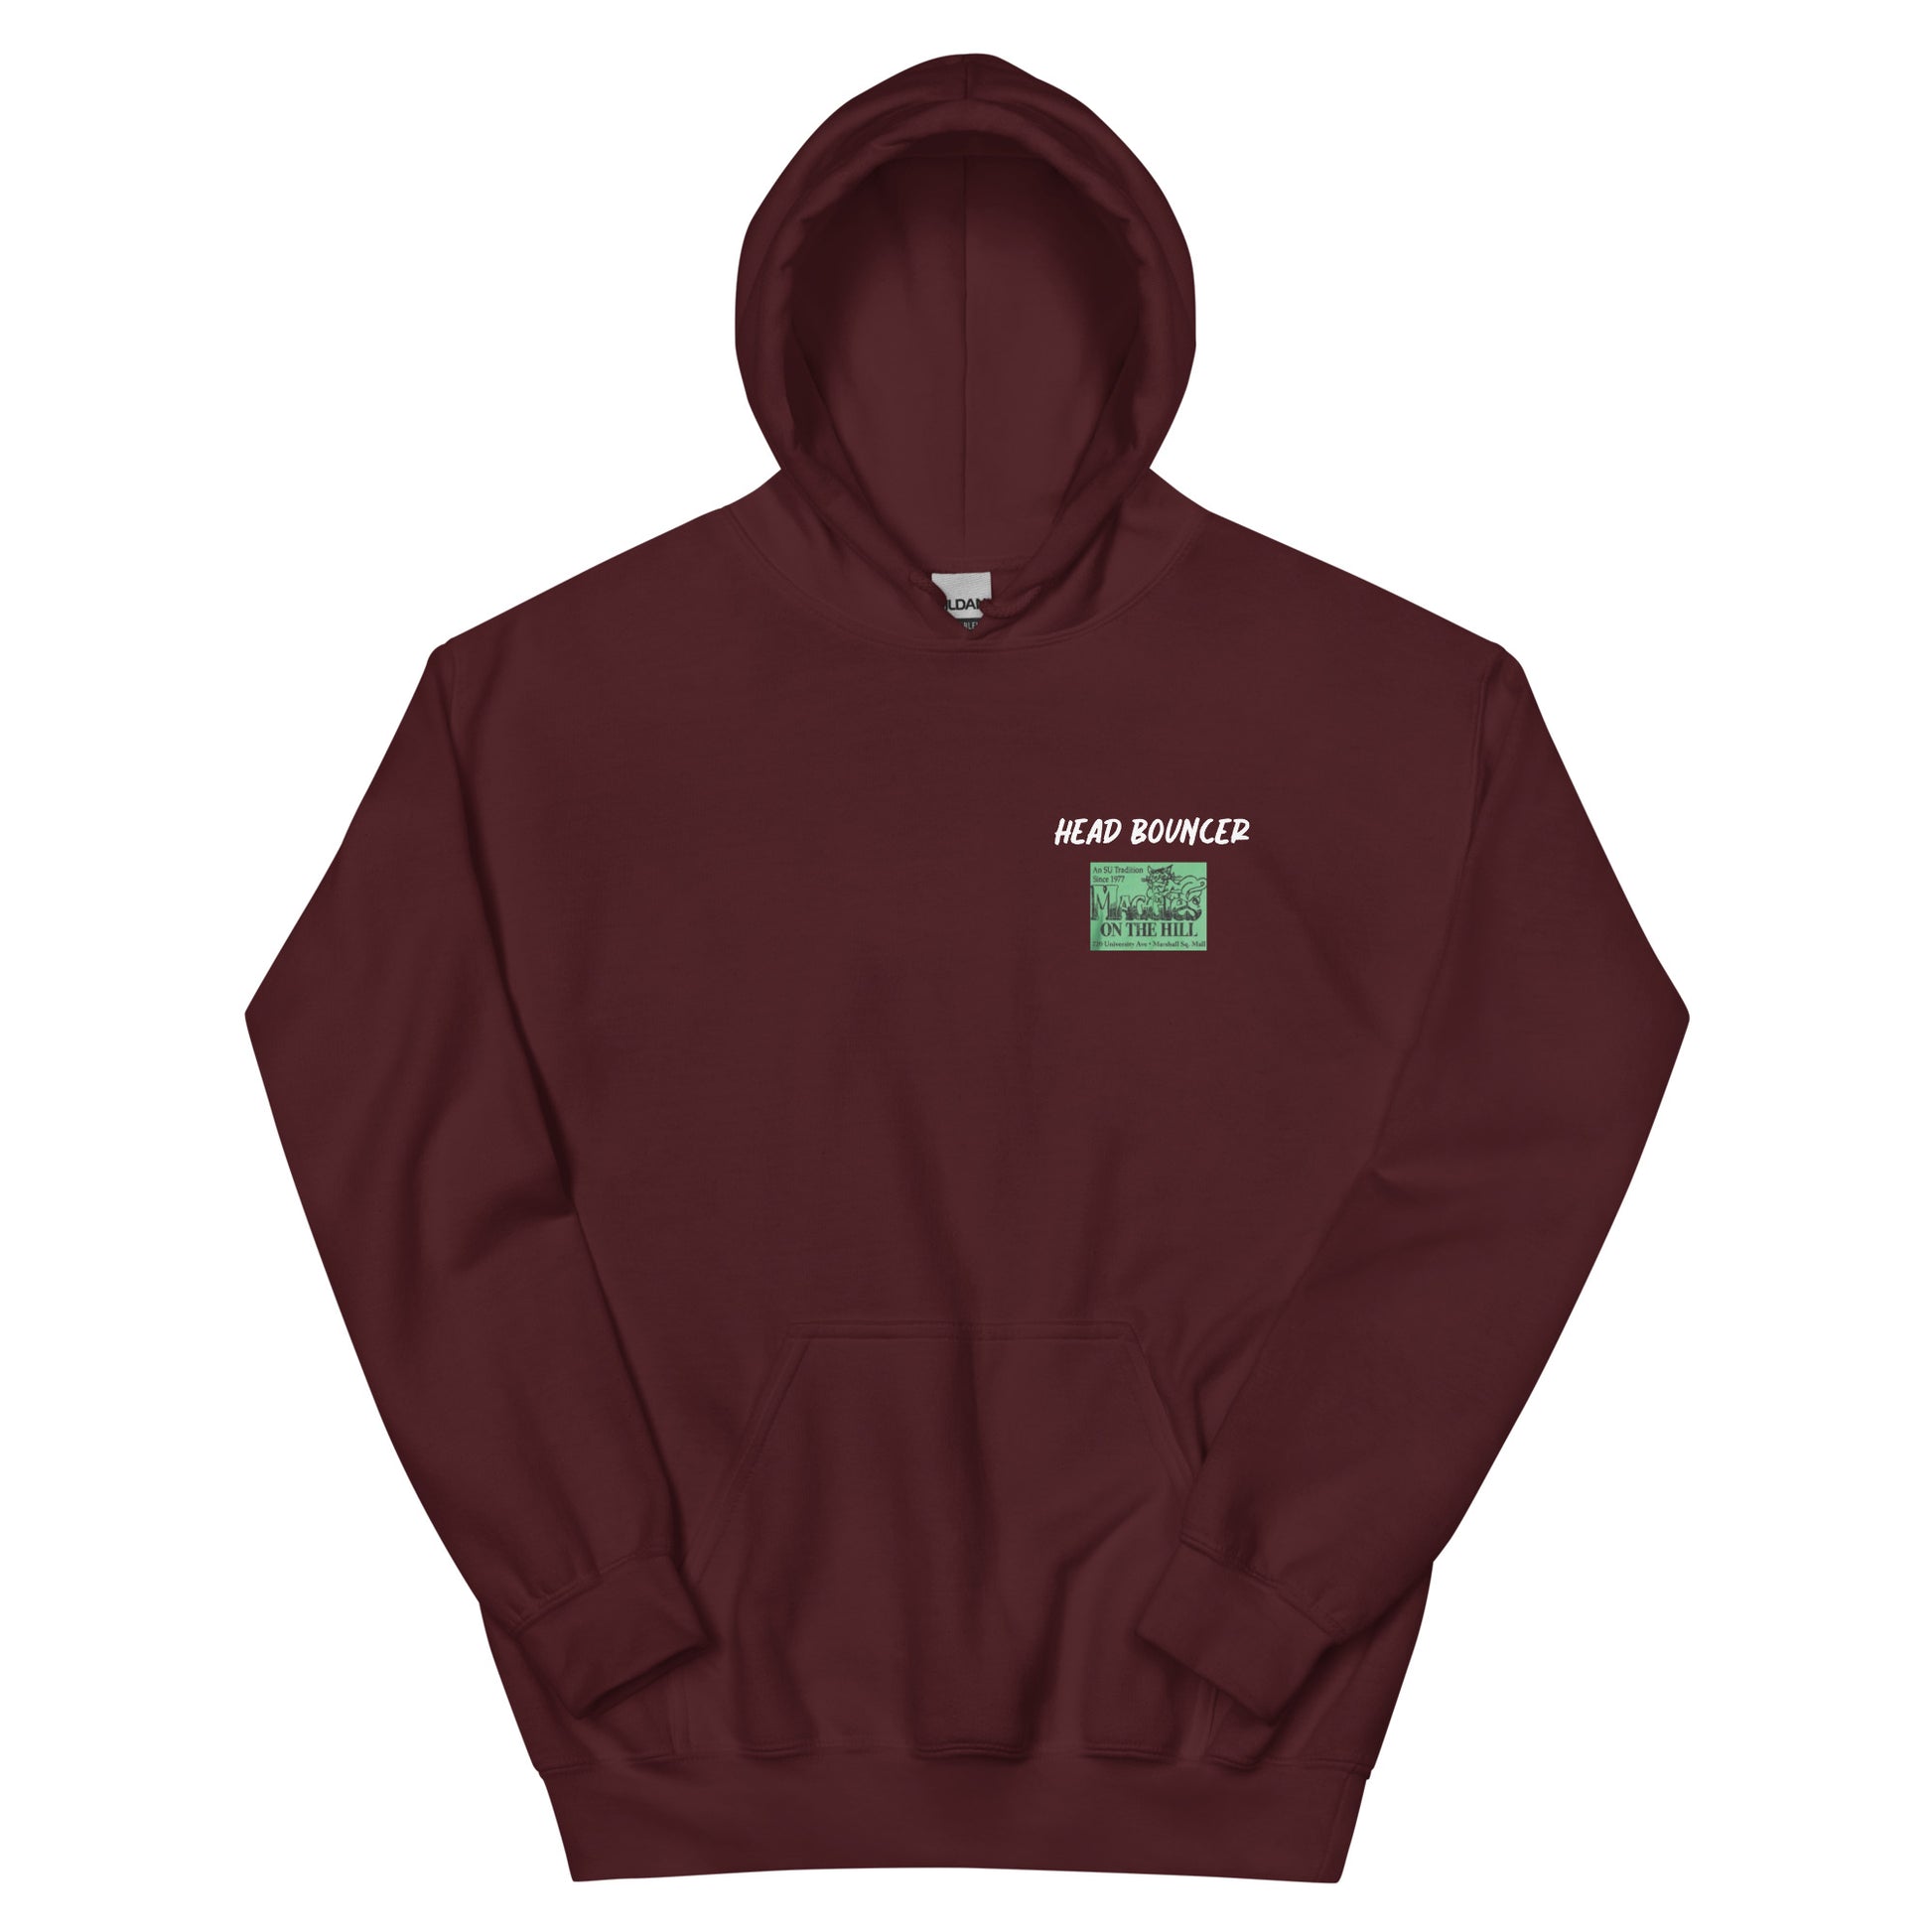 Best men's maroon sweatshirt graphic hoodie with warm pouch